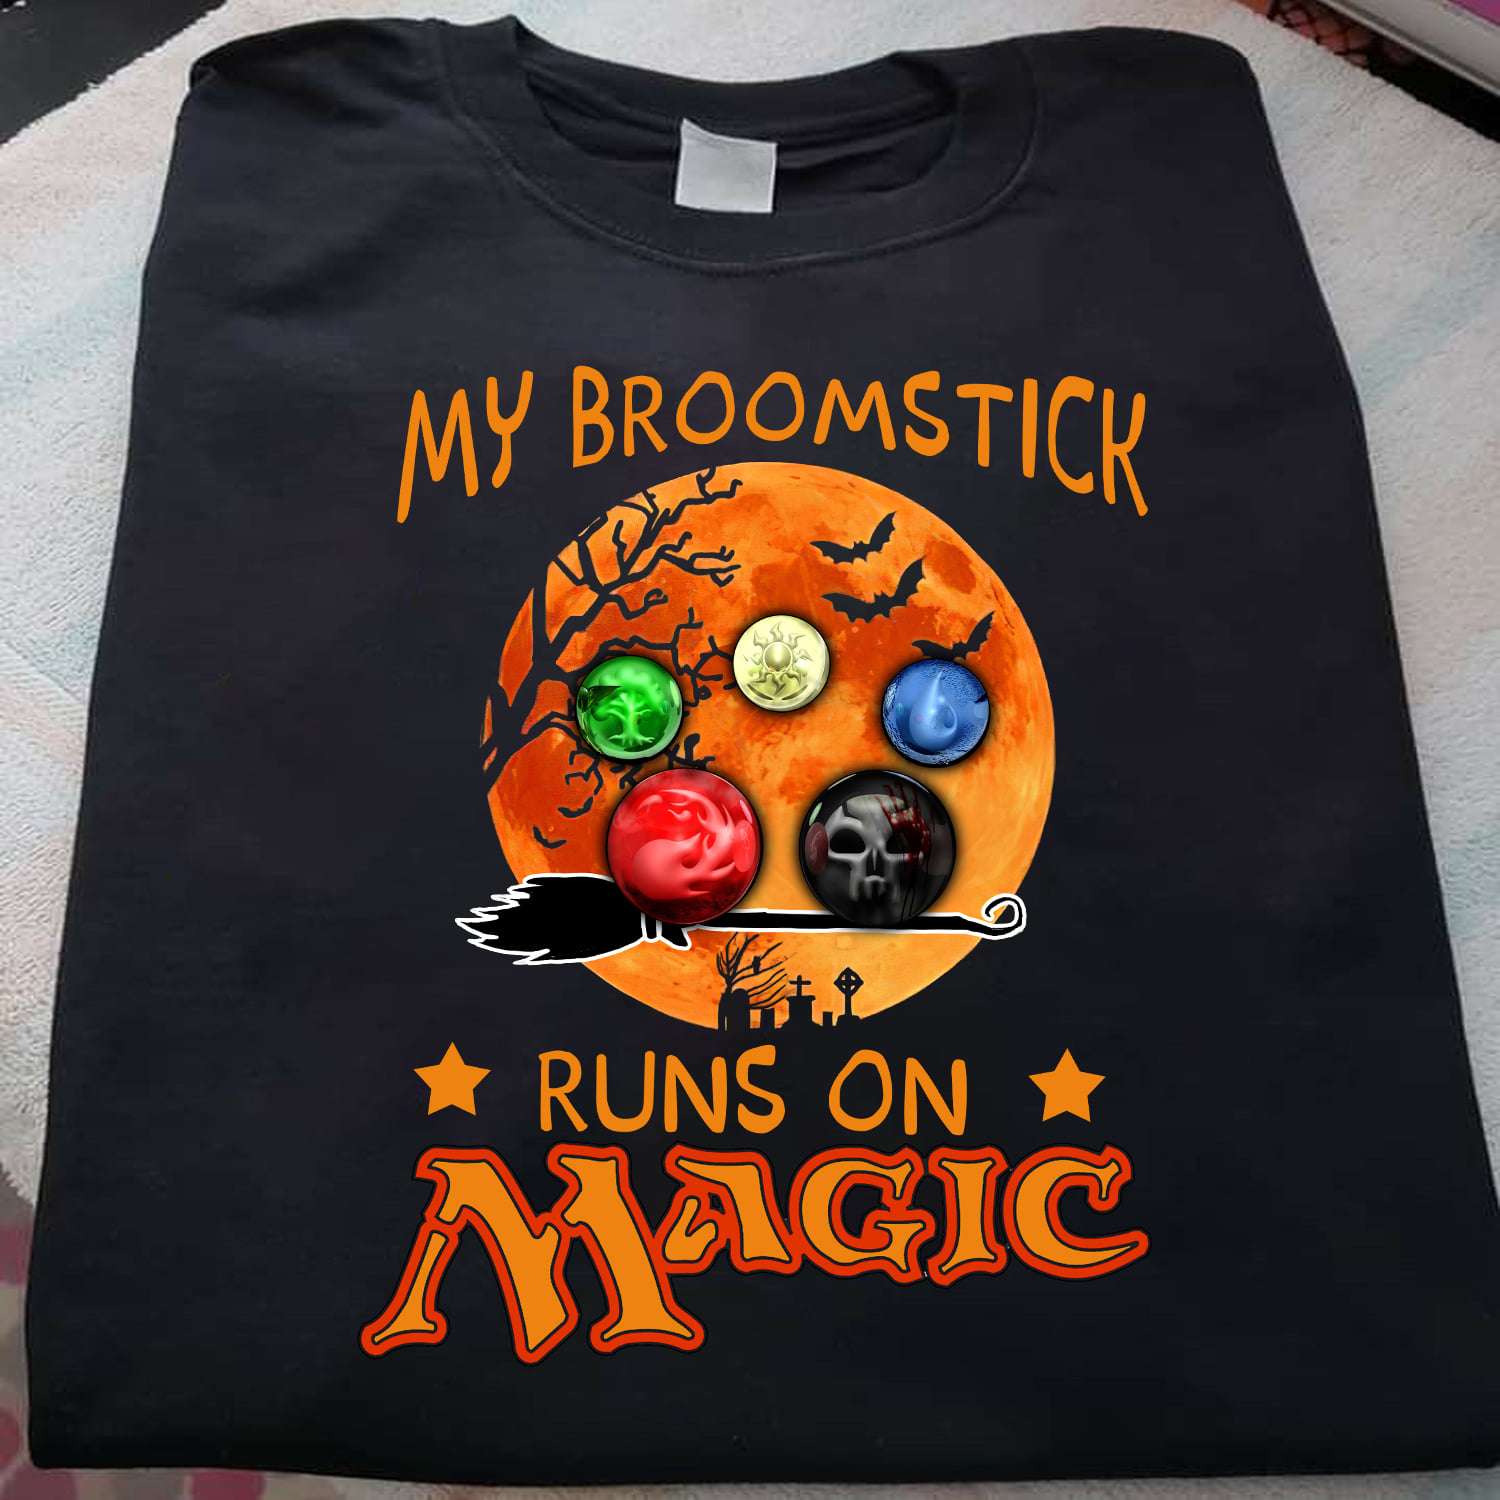 Magic Stone - My broomstick runs on magic